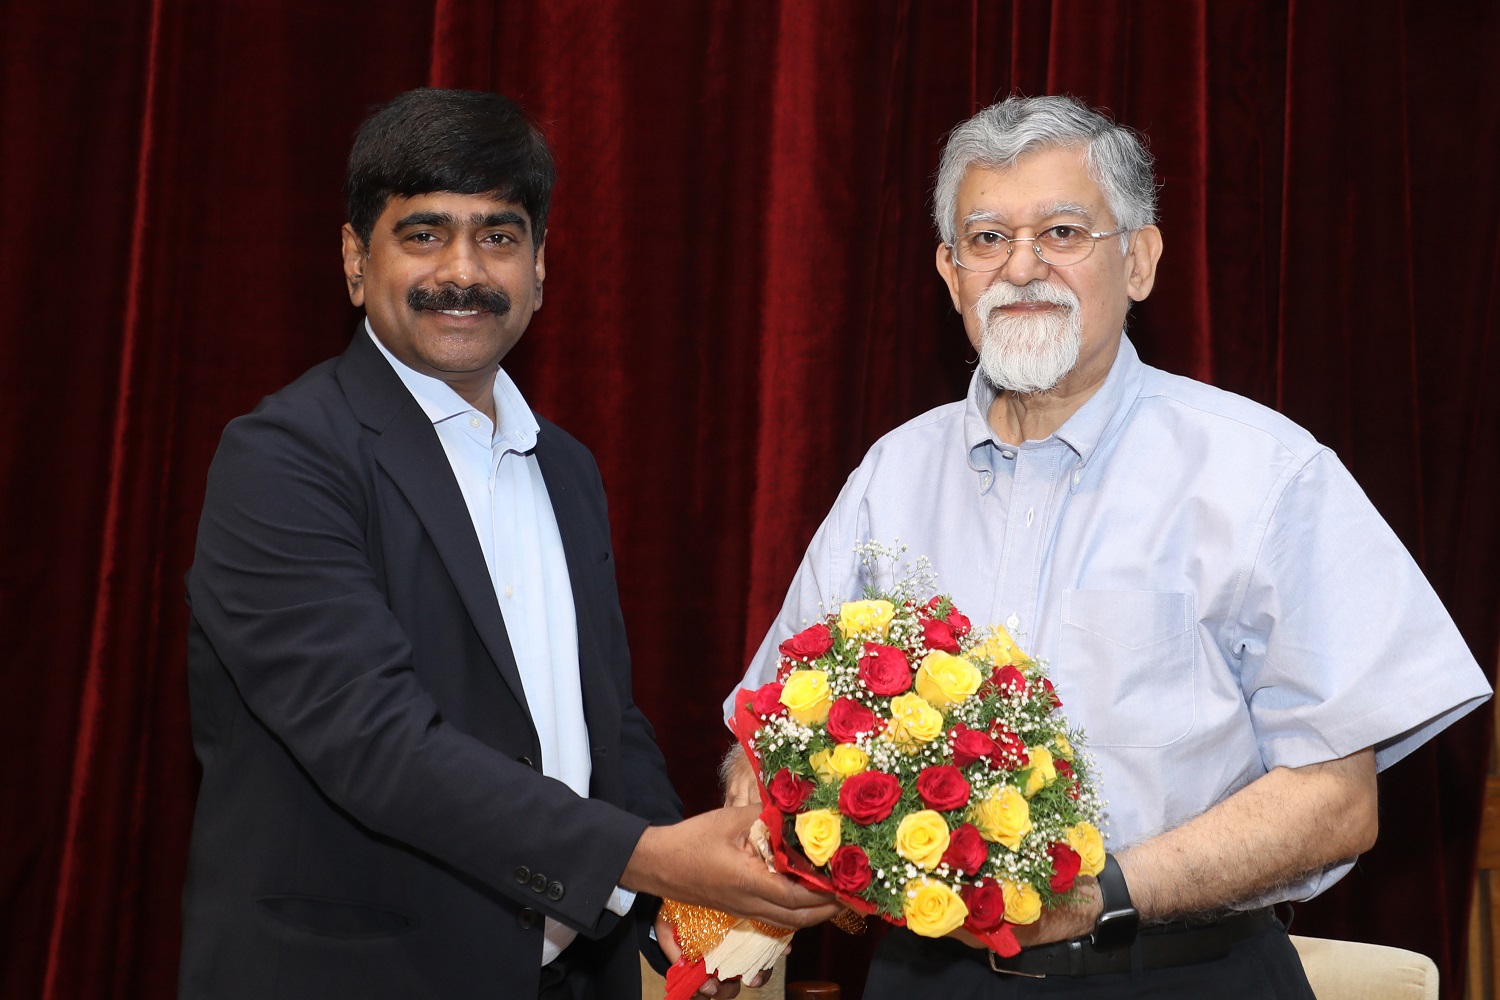 Prof. U Dinesh Kumar, Dean, Faculty, IIMB, welcomes Dr. Arvind Virmani, Member, NITI Aayog, to the conference.